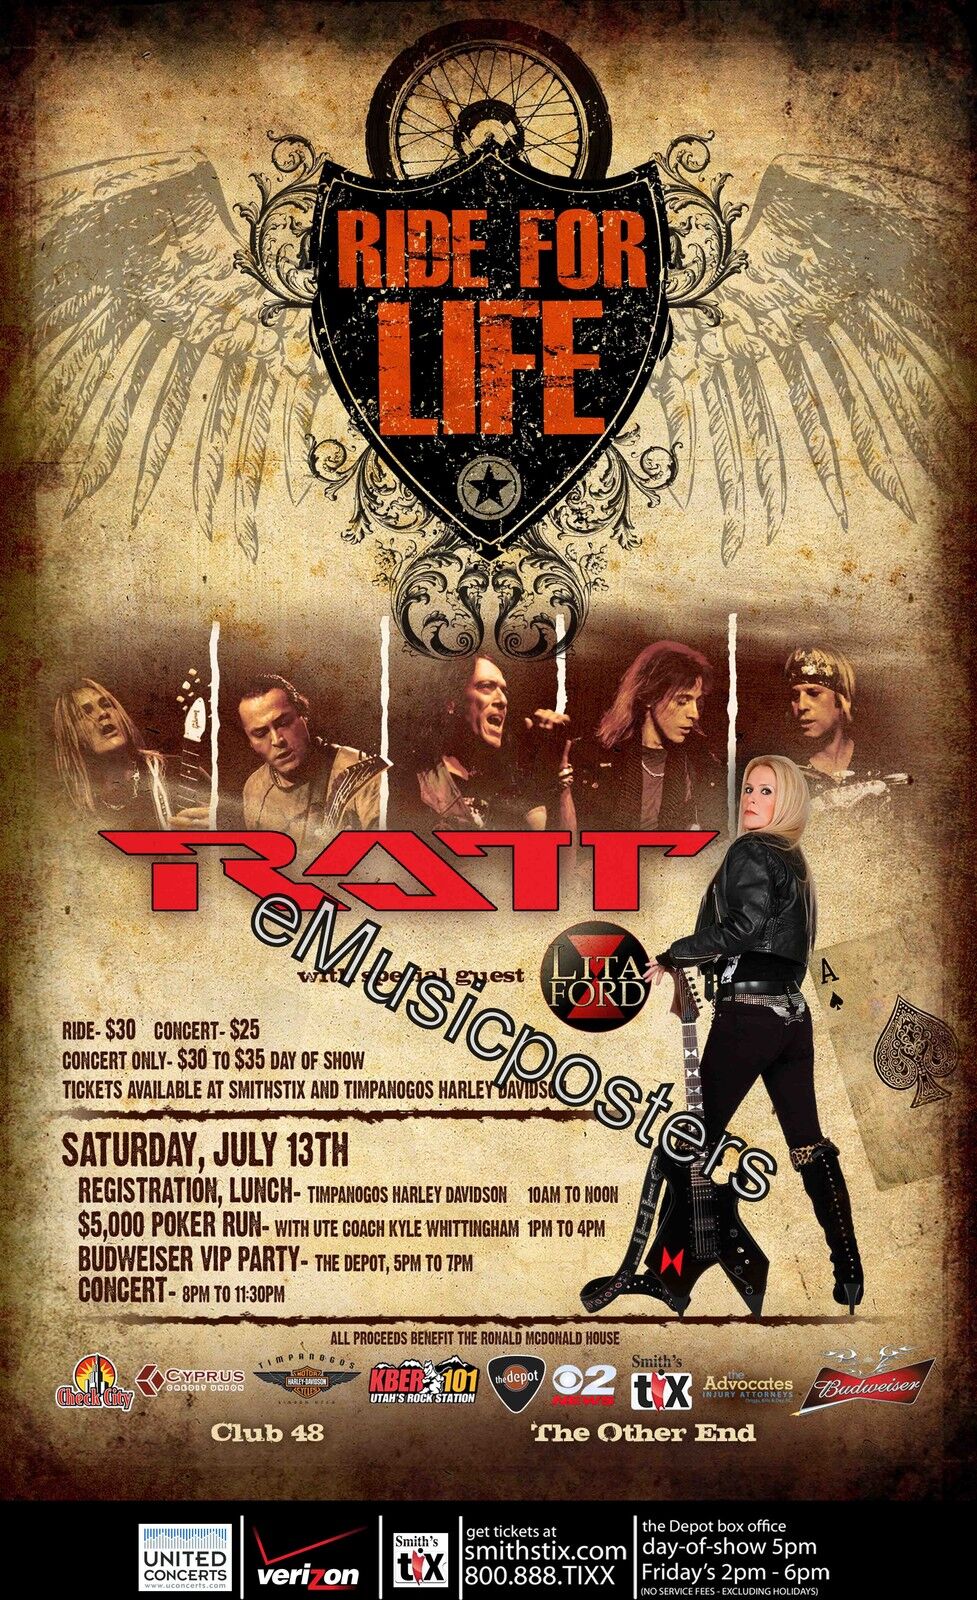 Ratt / Lita Ford "ride For Life" 2013 Salt Lake Concert Poster- Glam Metal Music